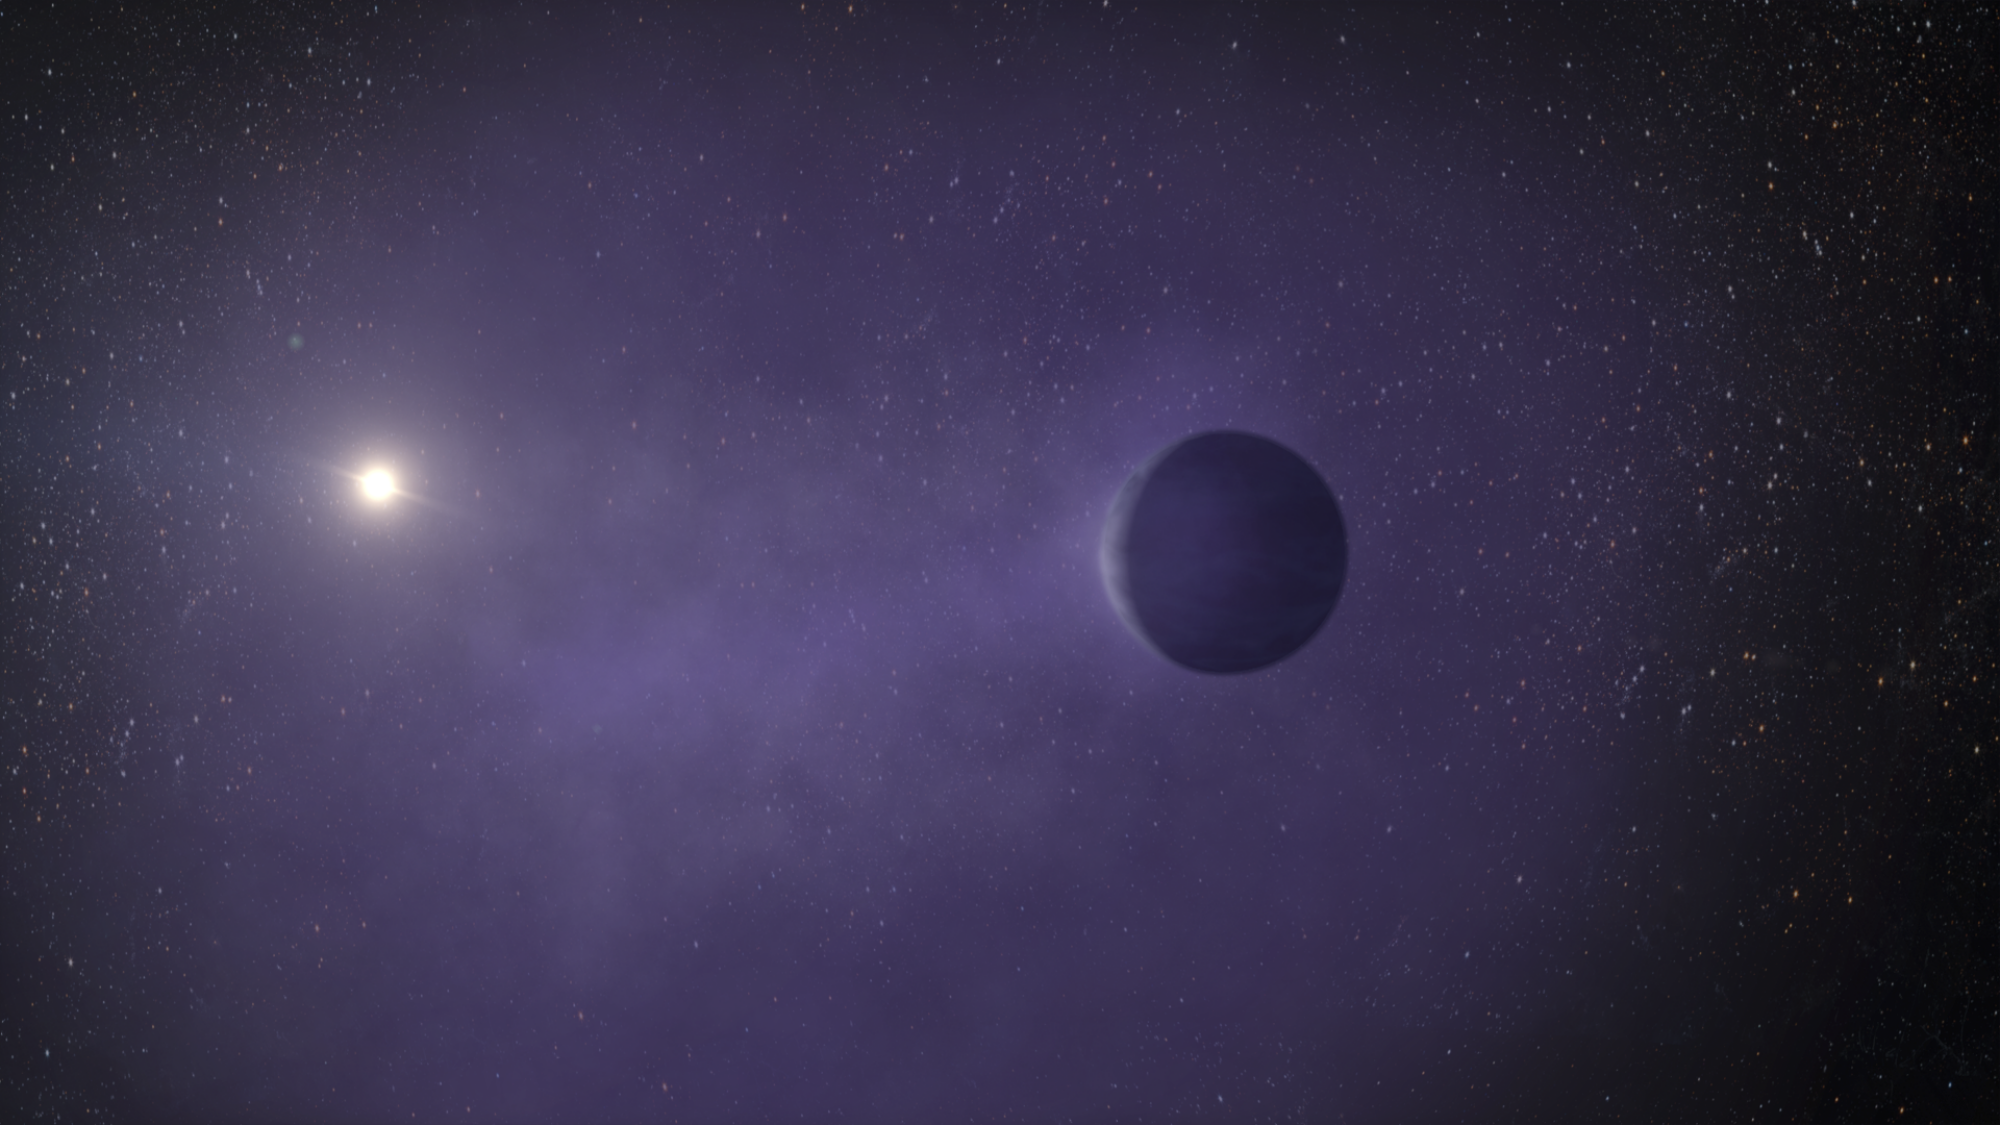 Mini Neptune orbiting a star